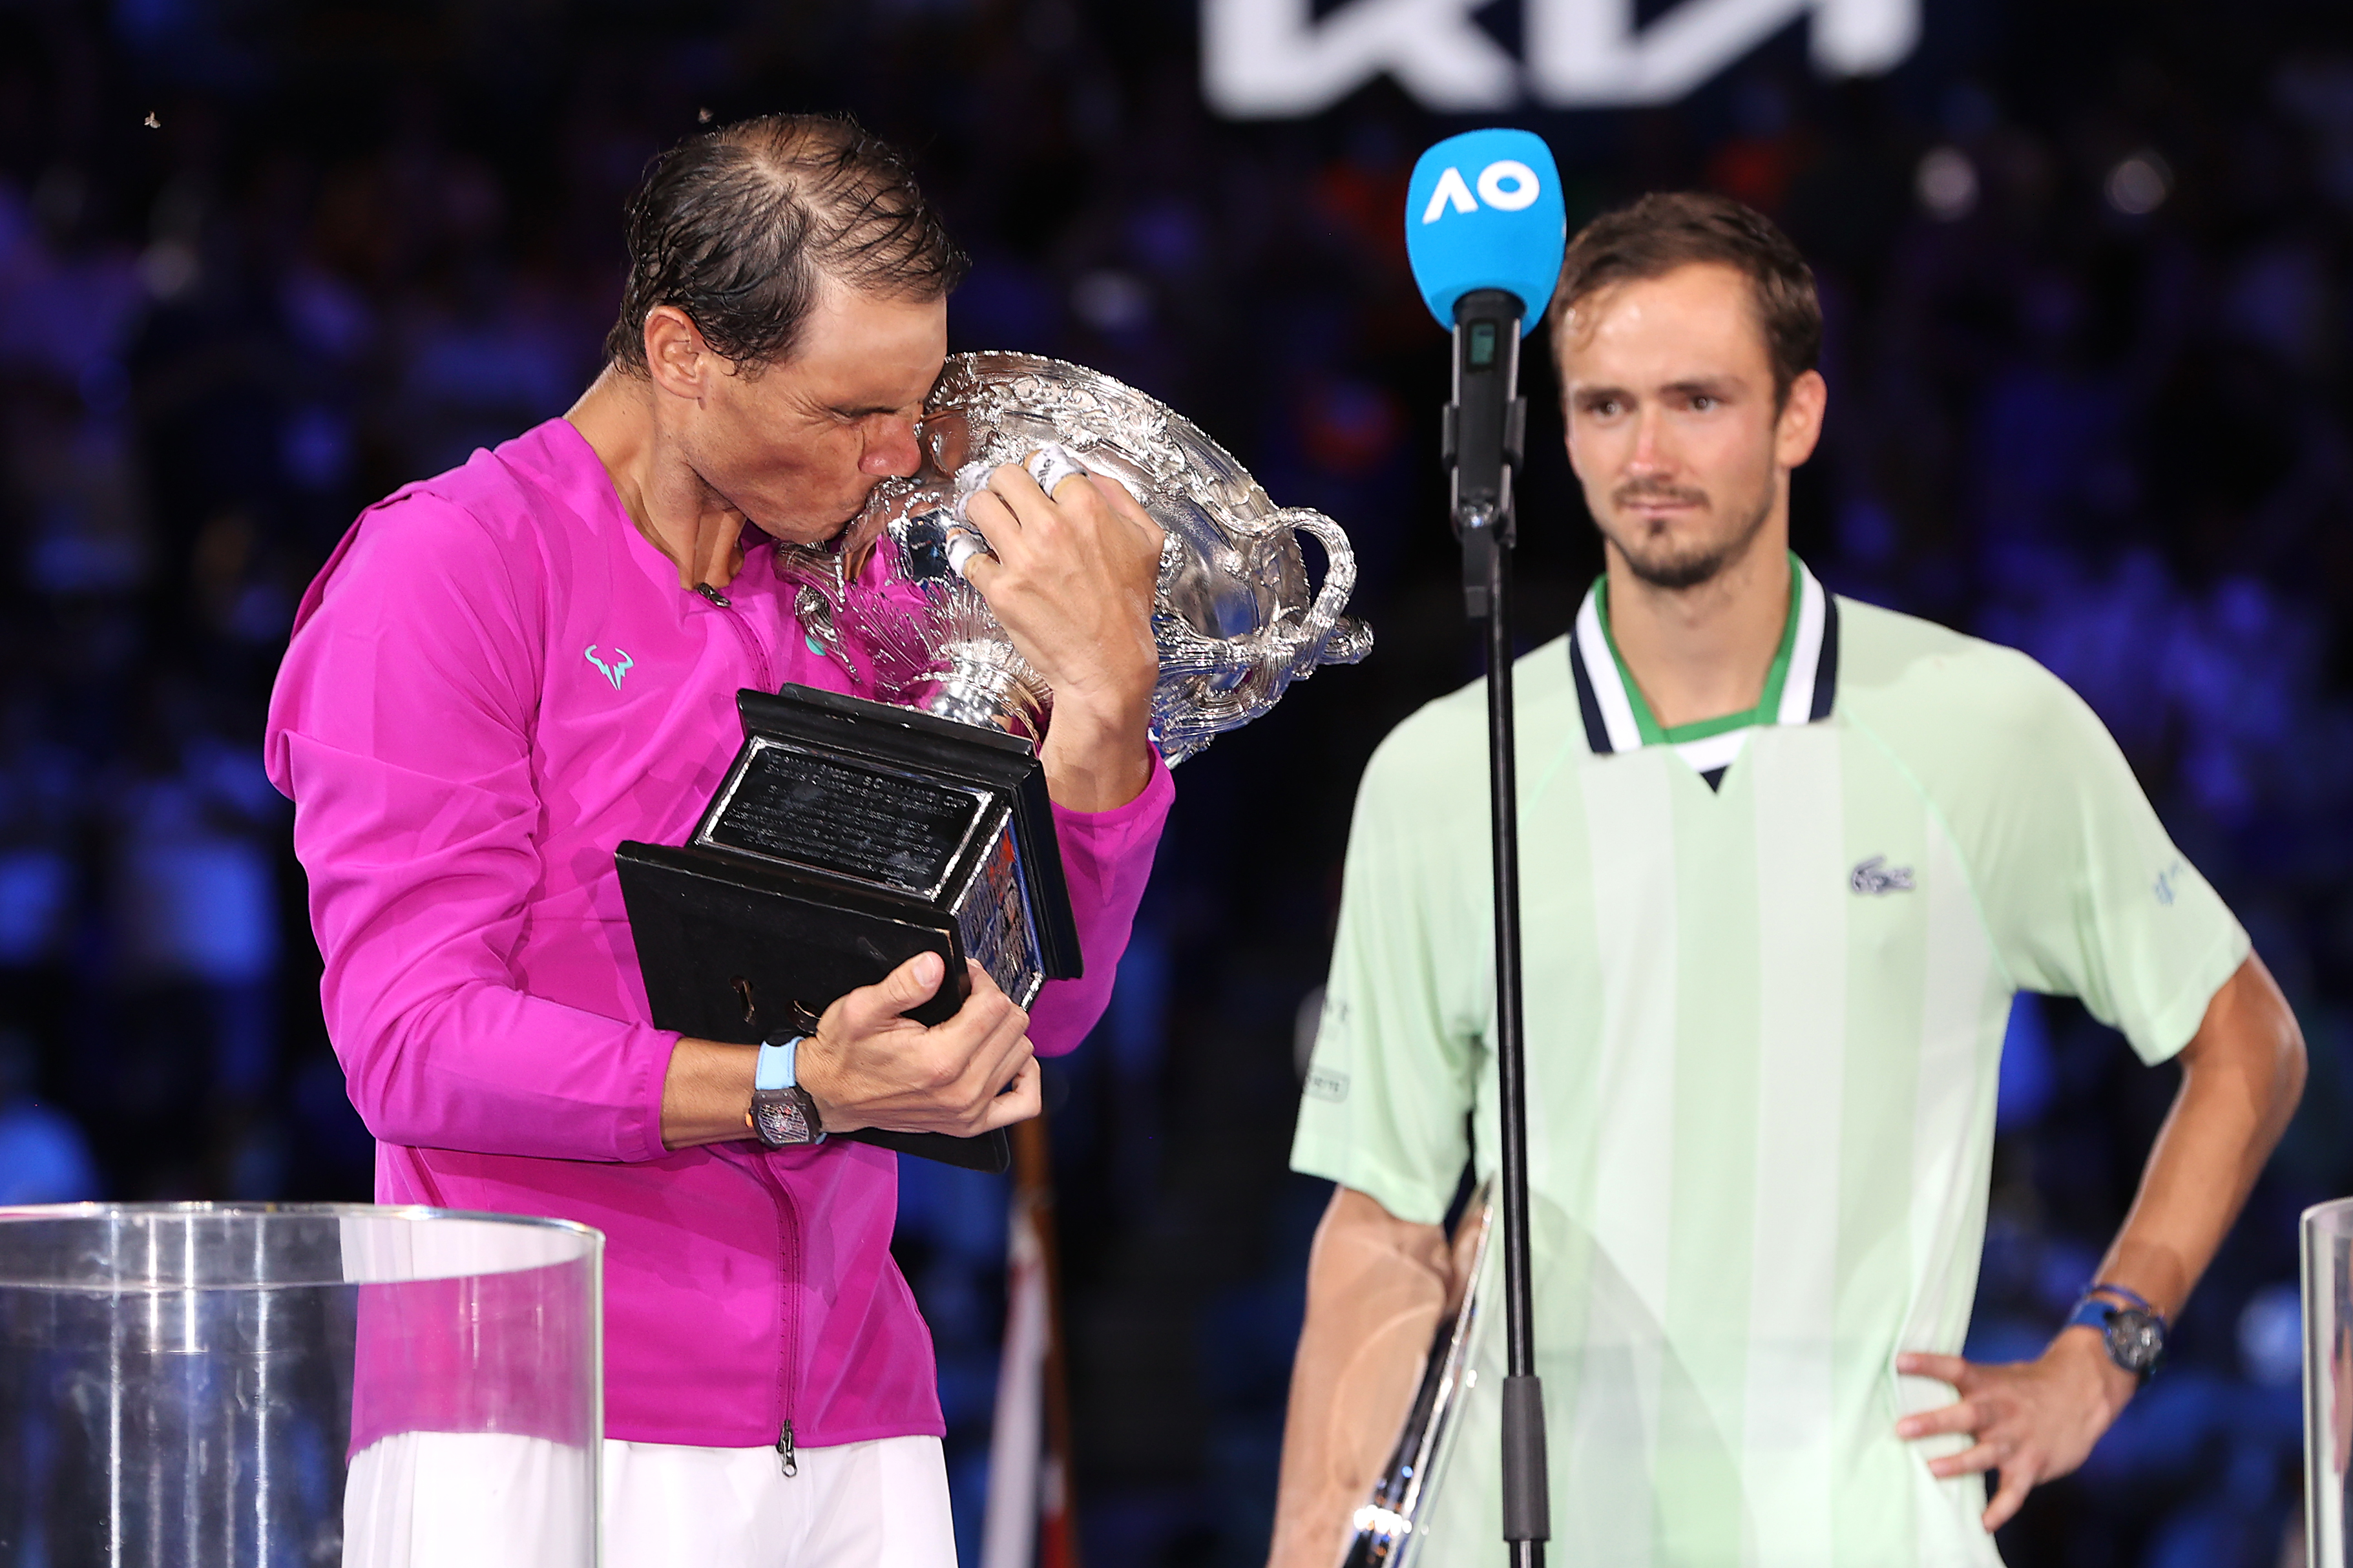 Australian Open 2022 Daniil Medvedev press conference after loss to Rafael Nadal